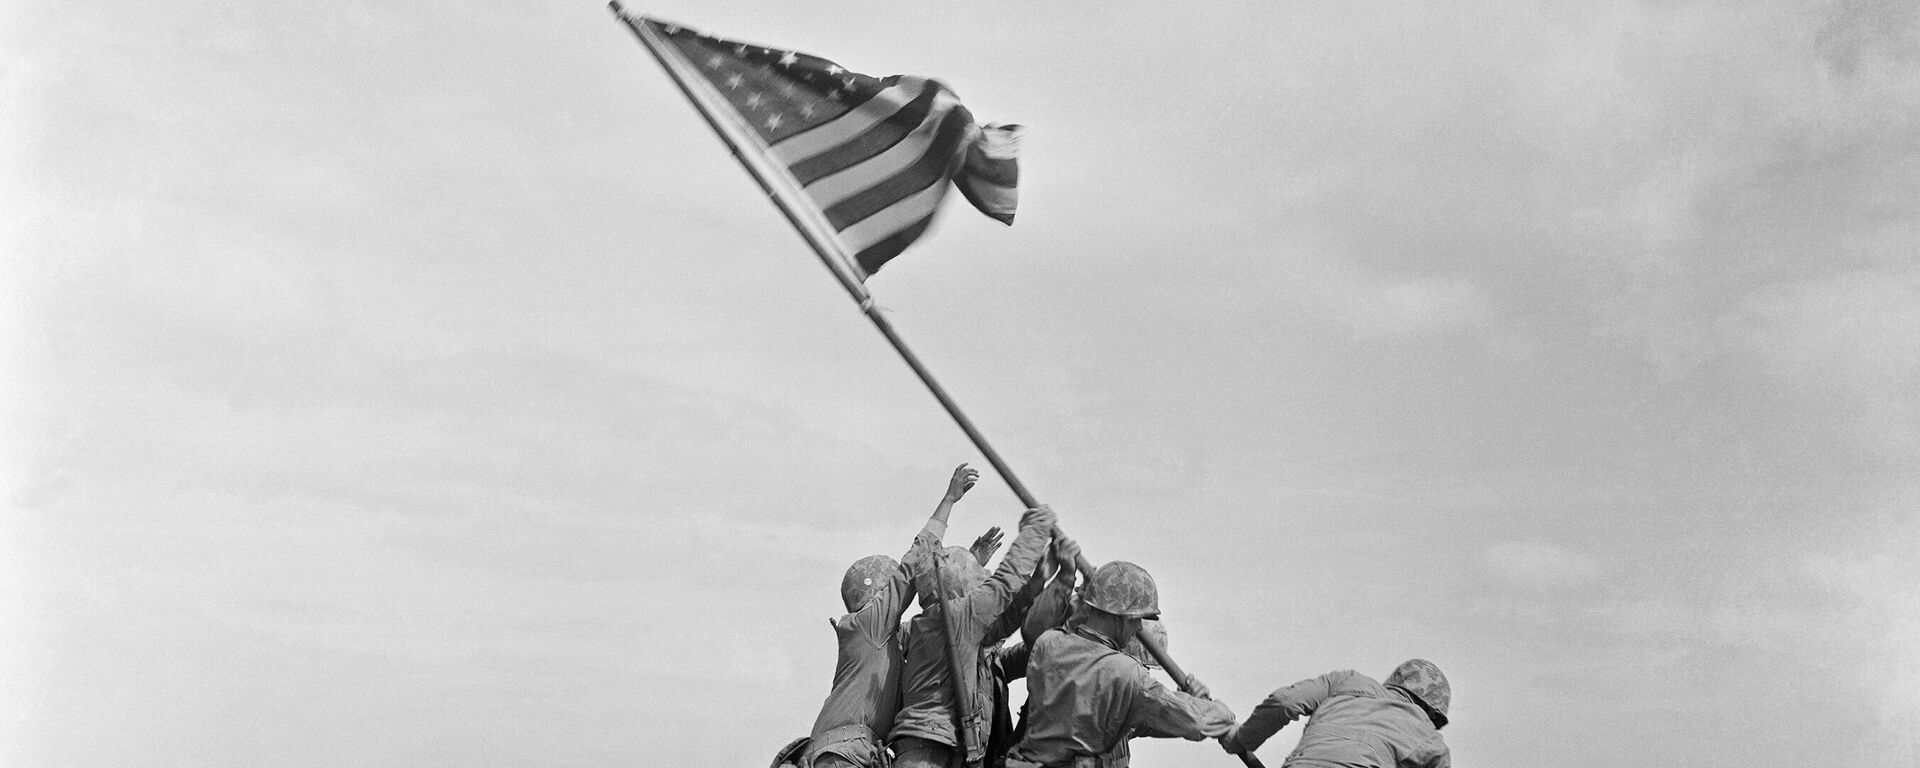 Izado de la bandera de Estados Unidos en Iwo Jima - Sputnik Mundo, 1920, 26.08.2021